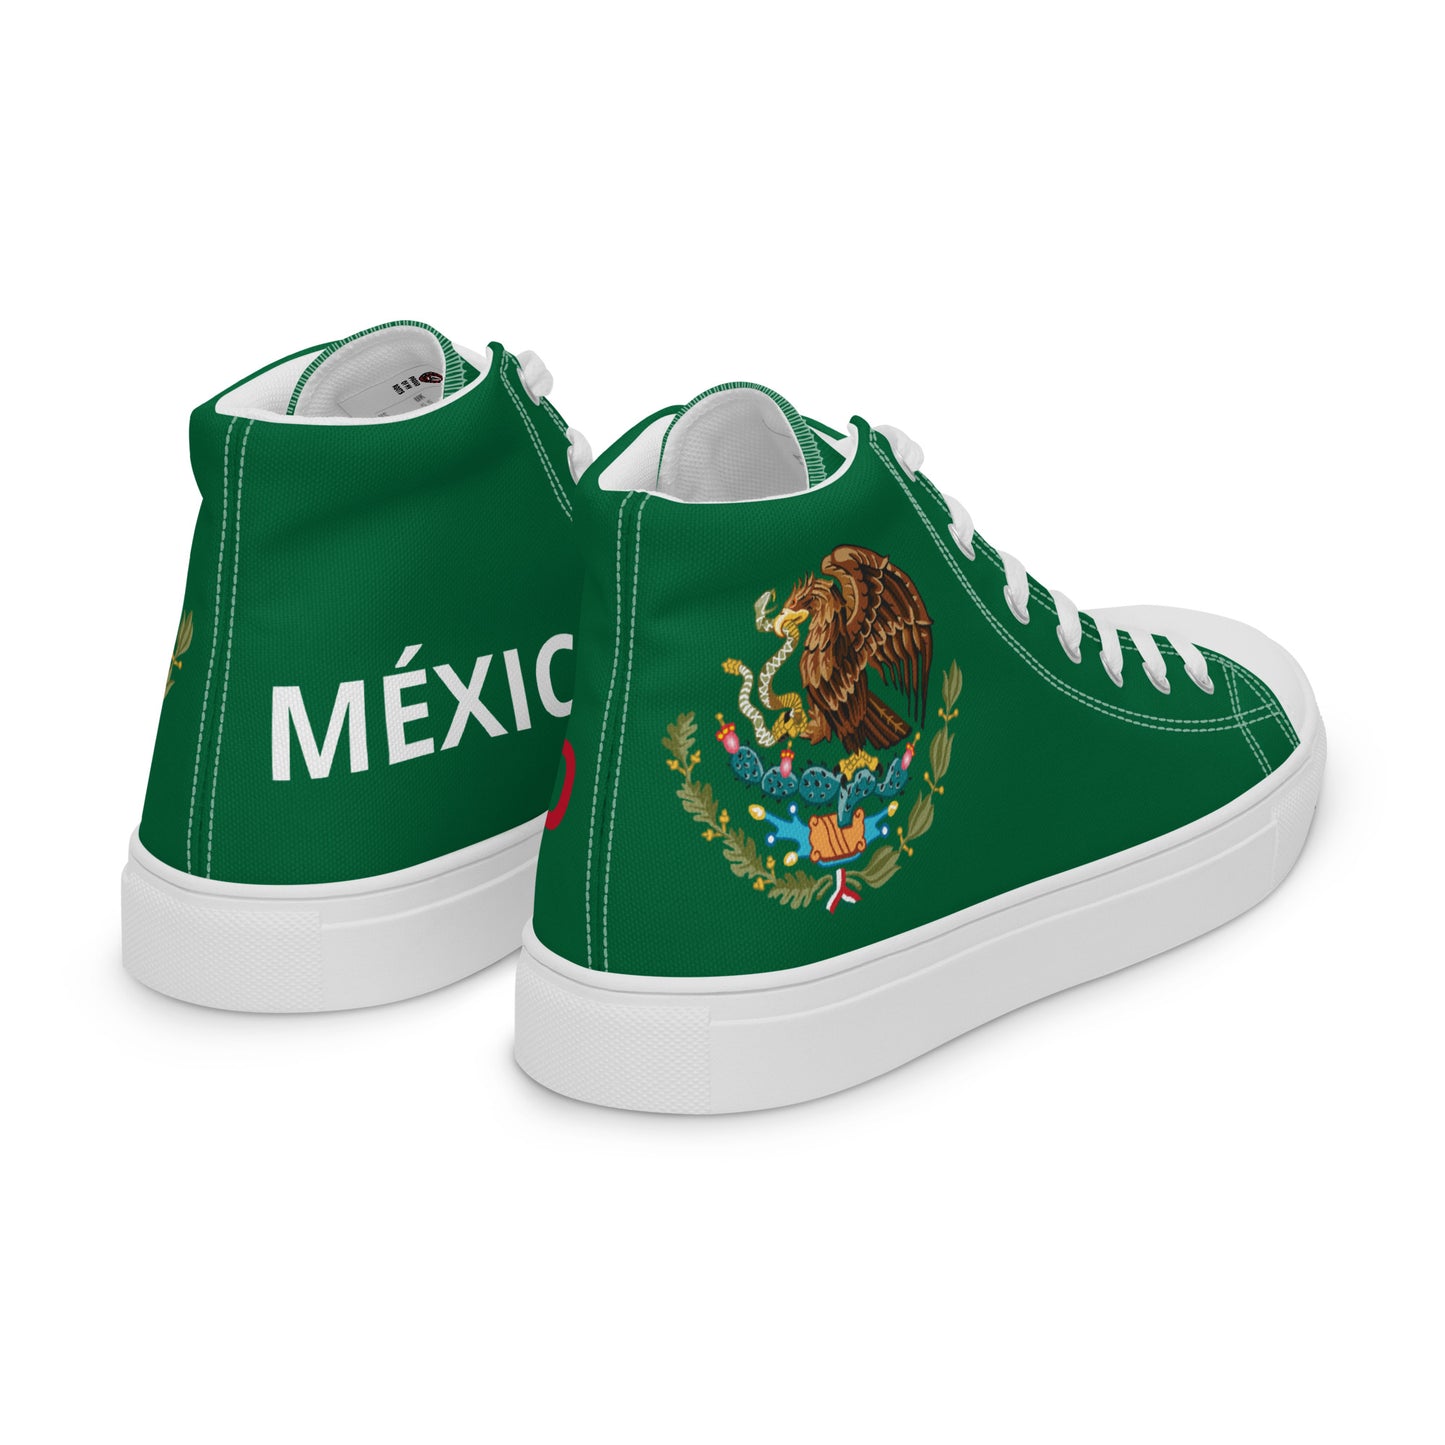 México - Women - Green - High top shoes